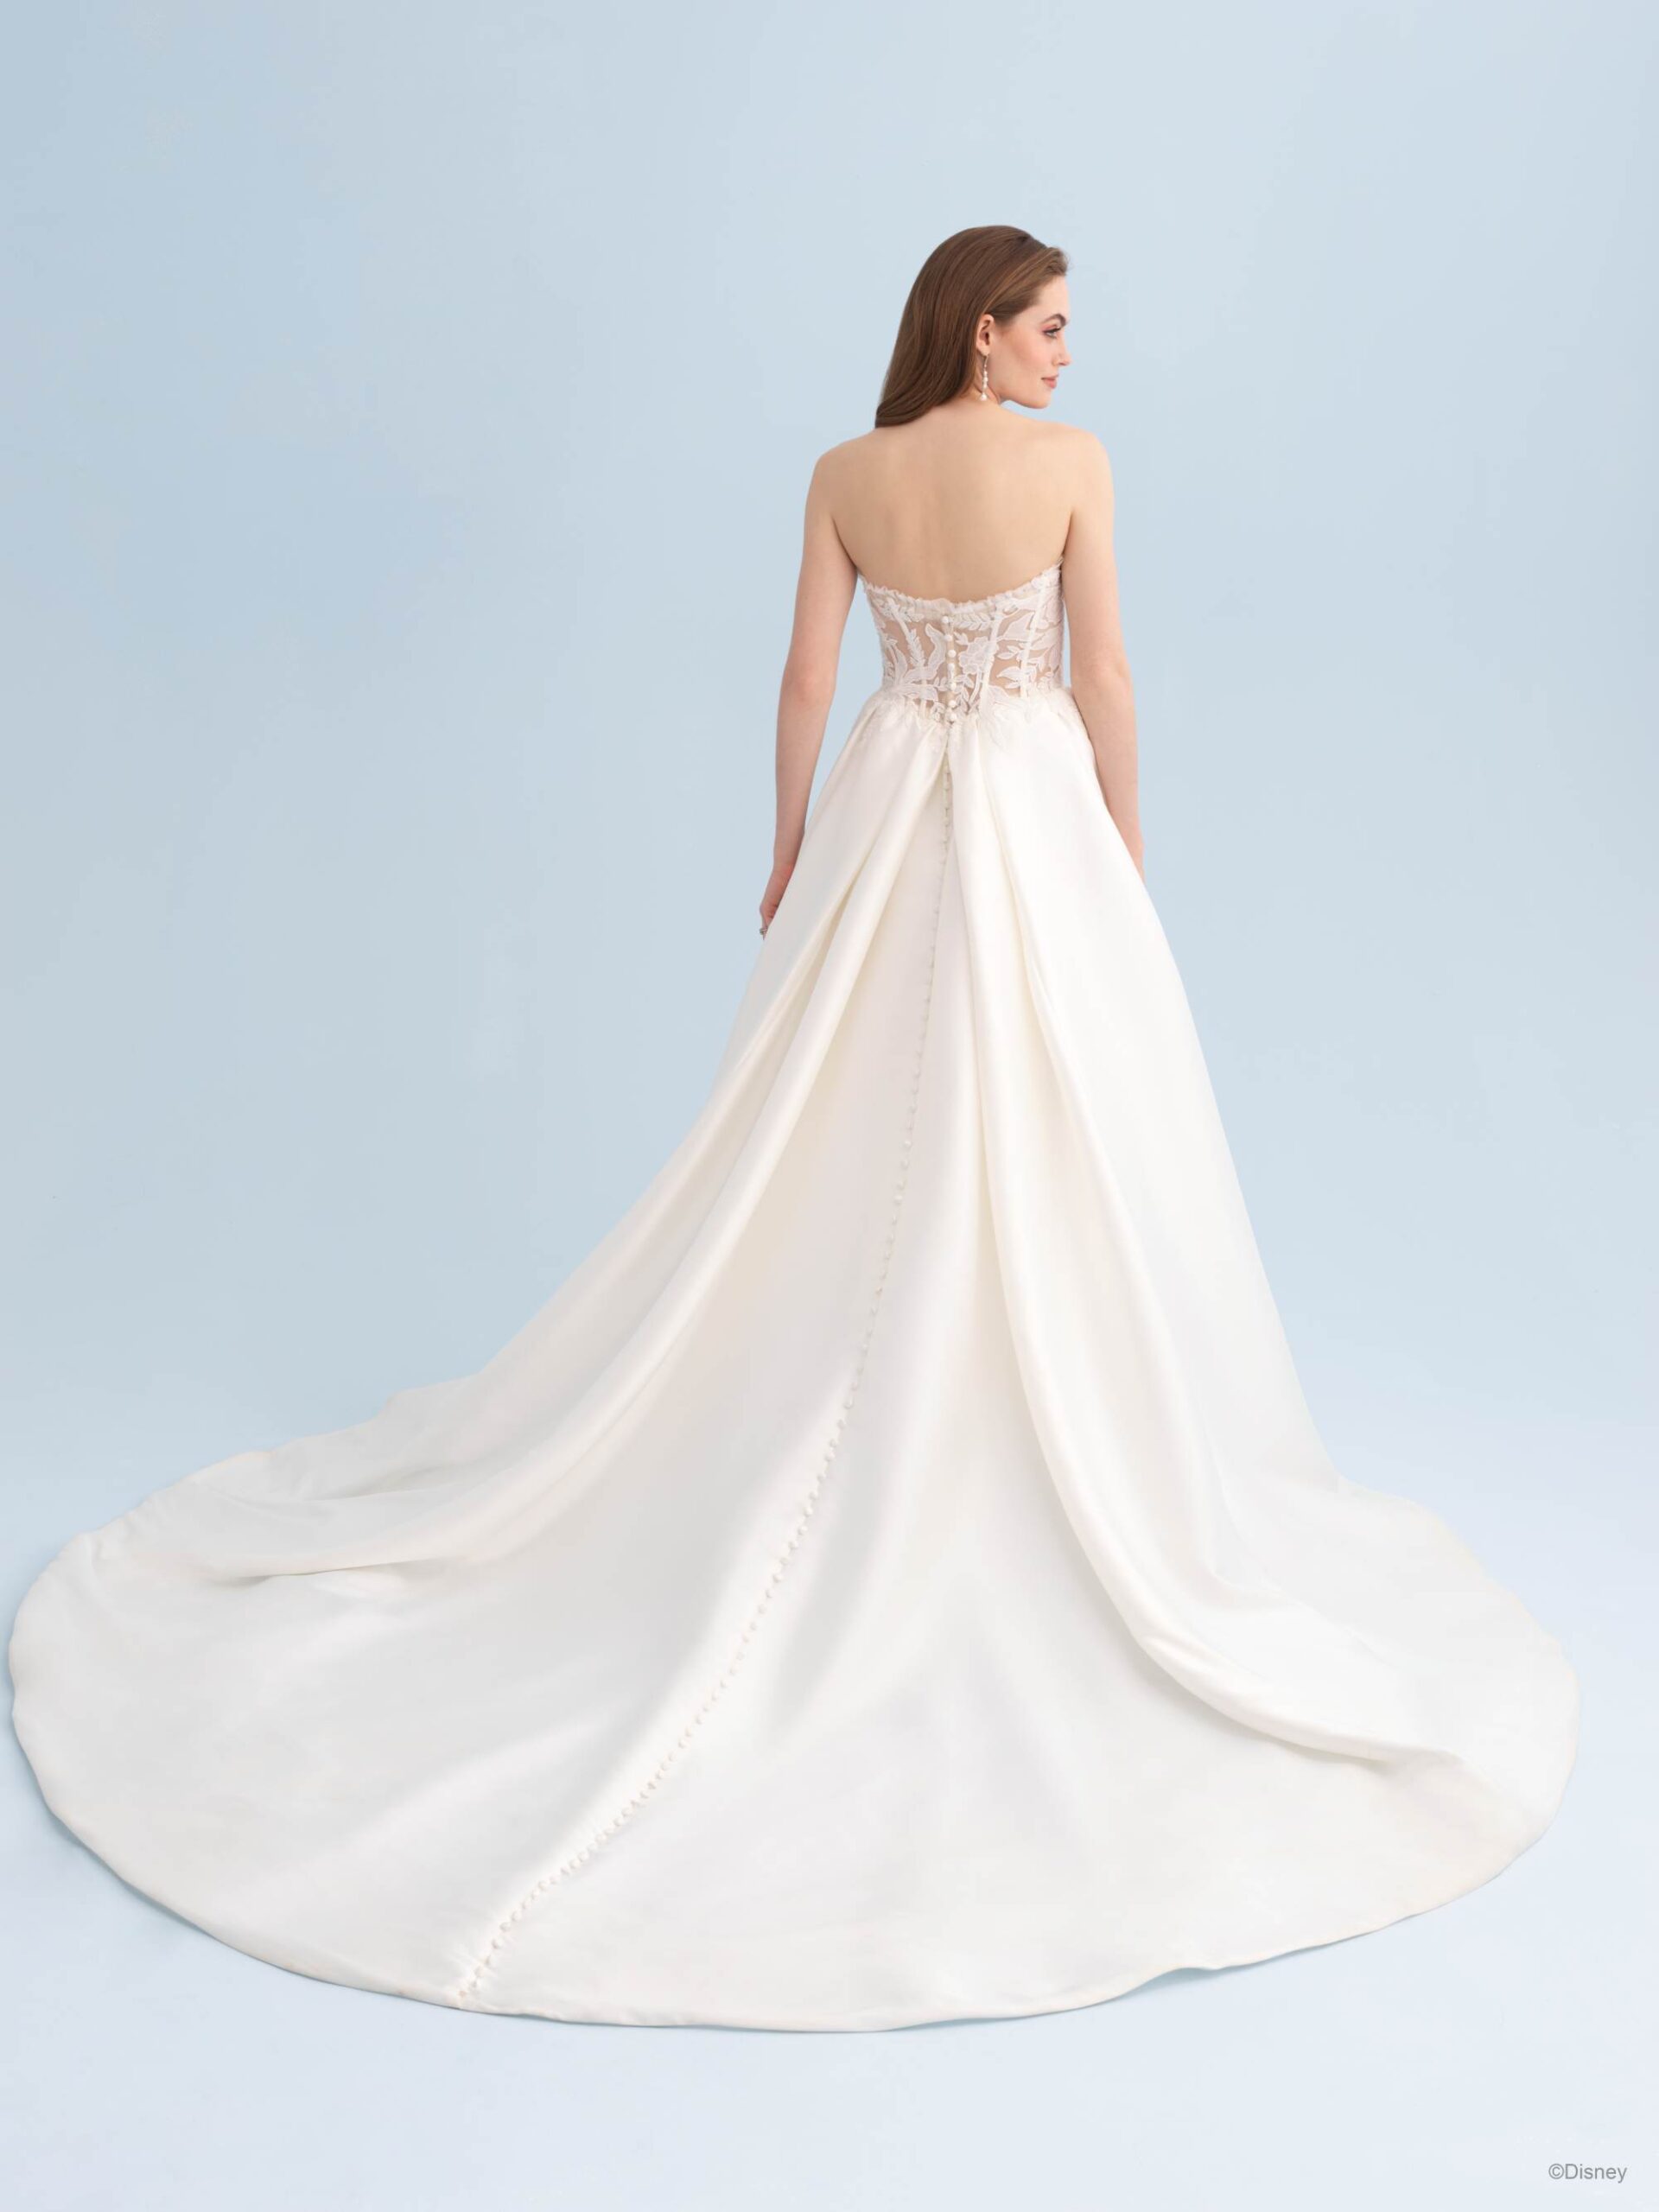 ballgown wedding dress, basque waist, wedding dress with lace, disney princess